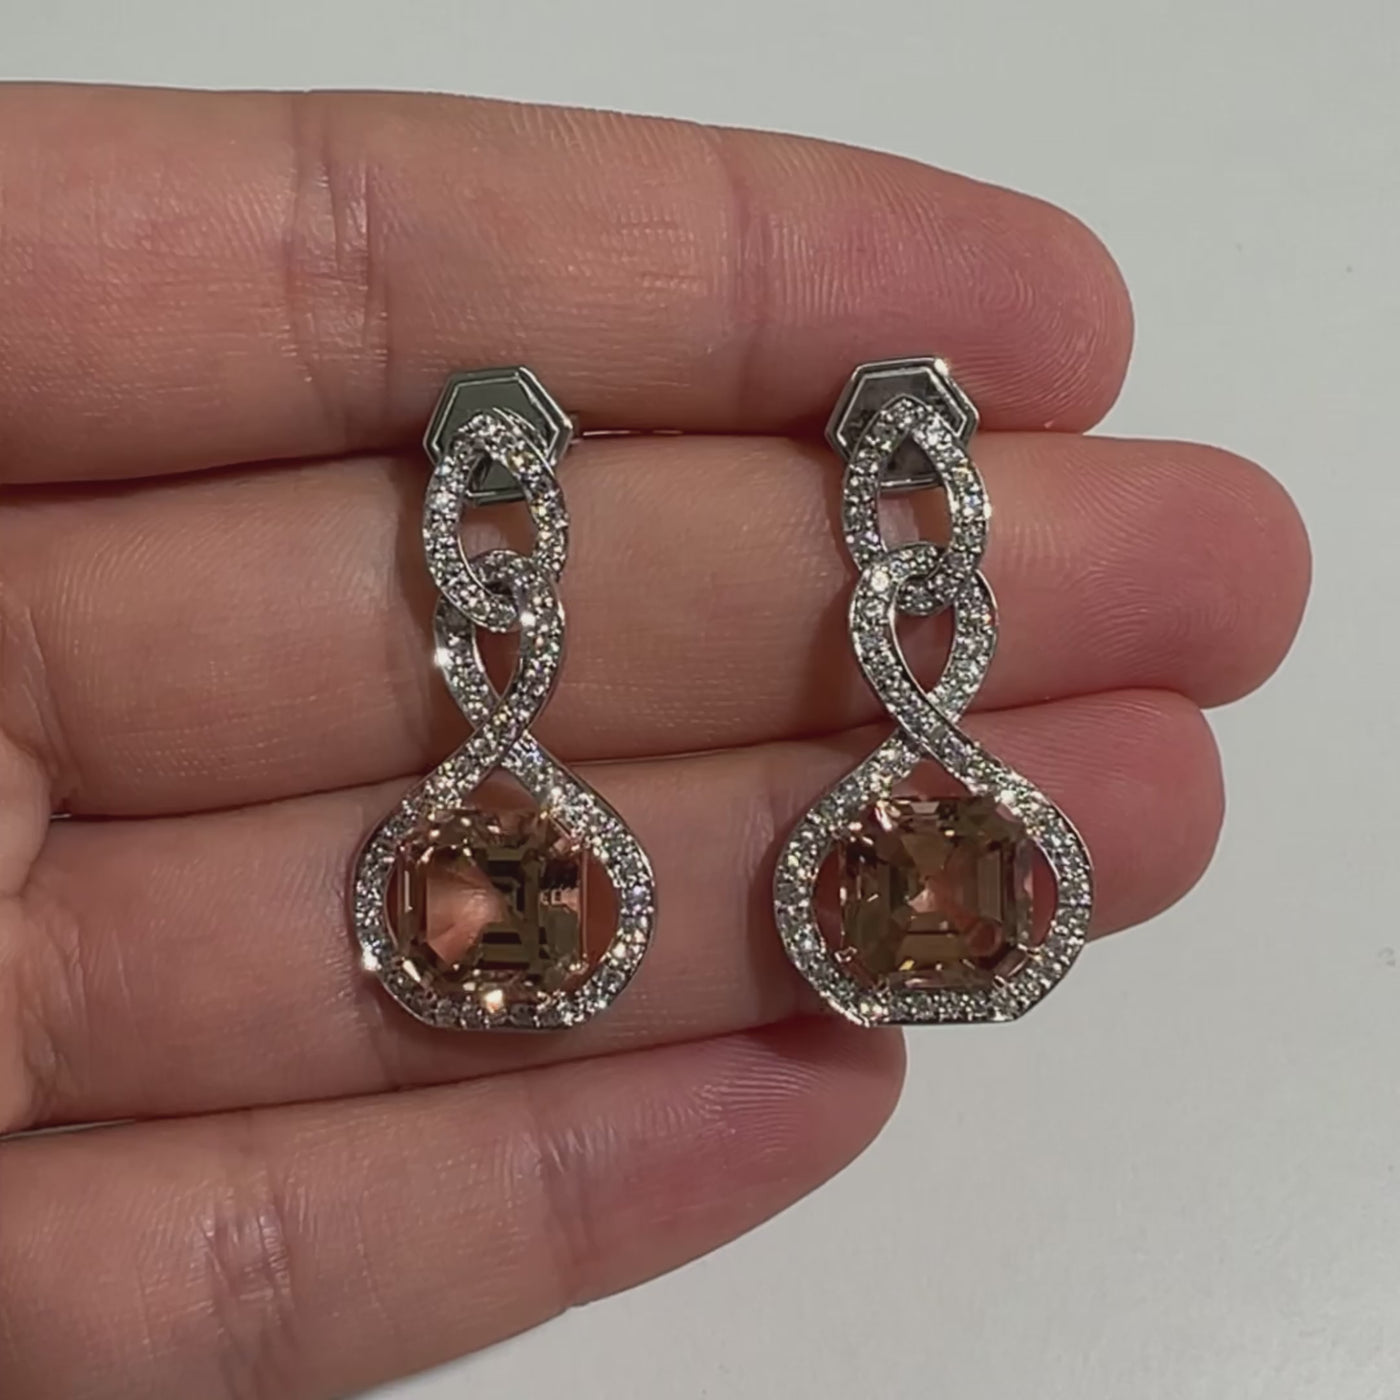 8.65 Carat Peach Tourmaline and Diamond Dangle Earrings in 18k White Gold